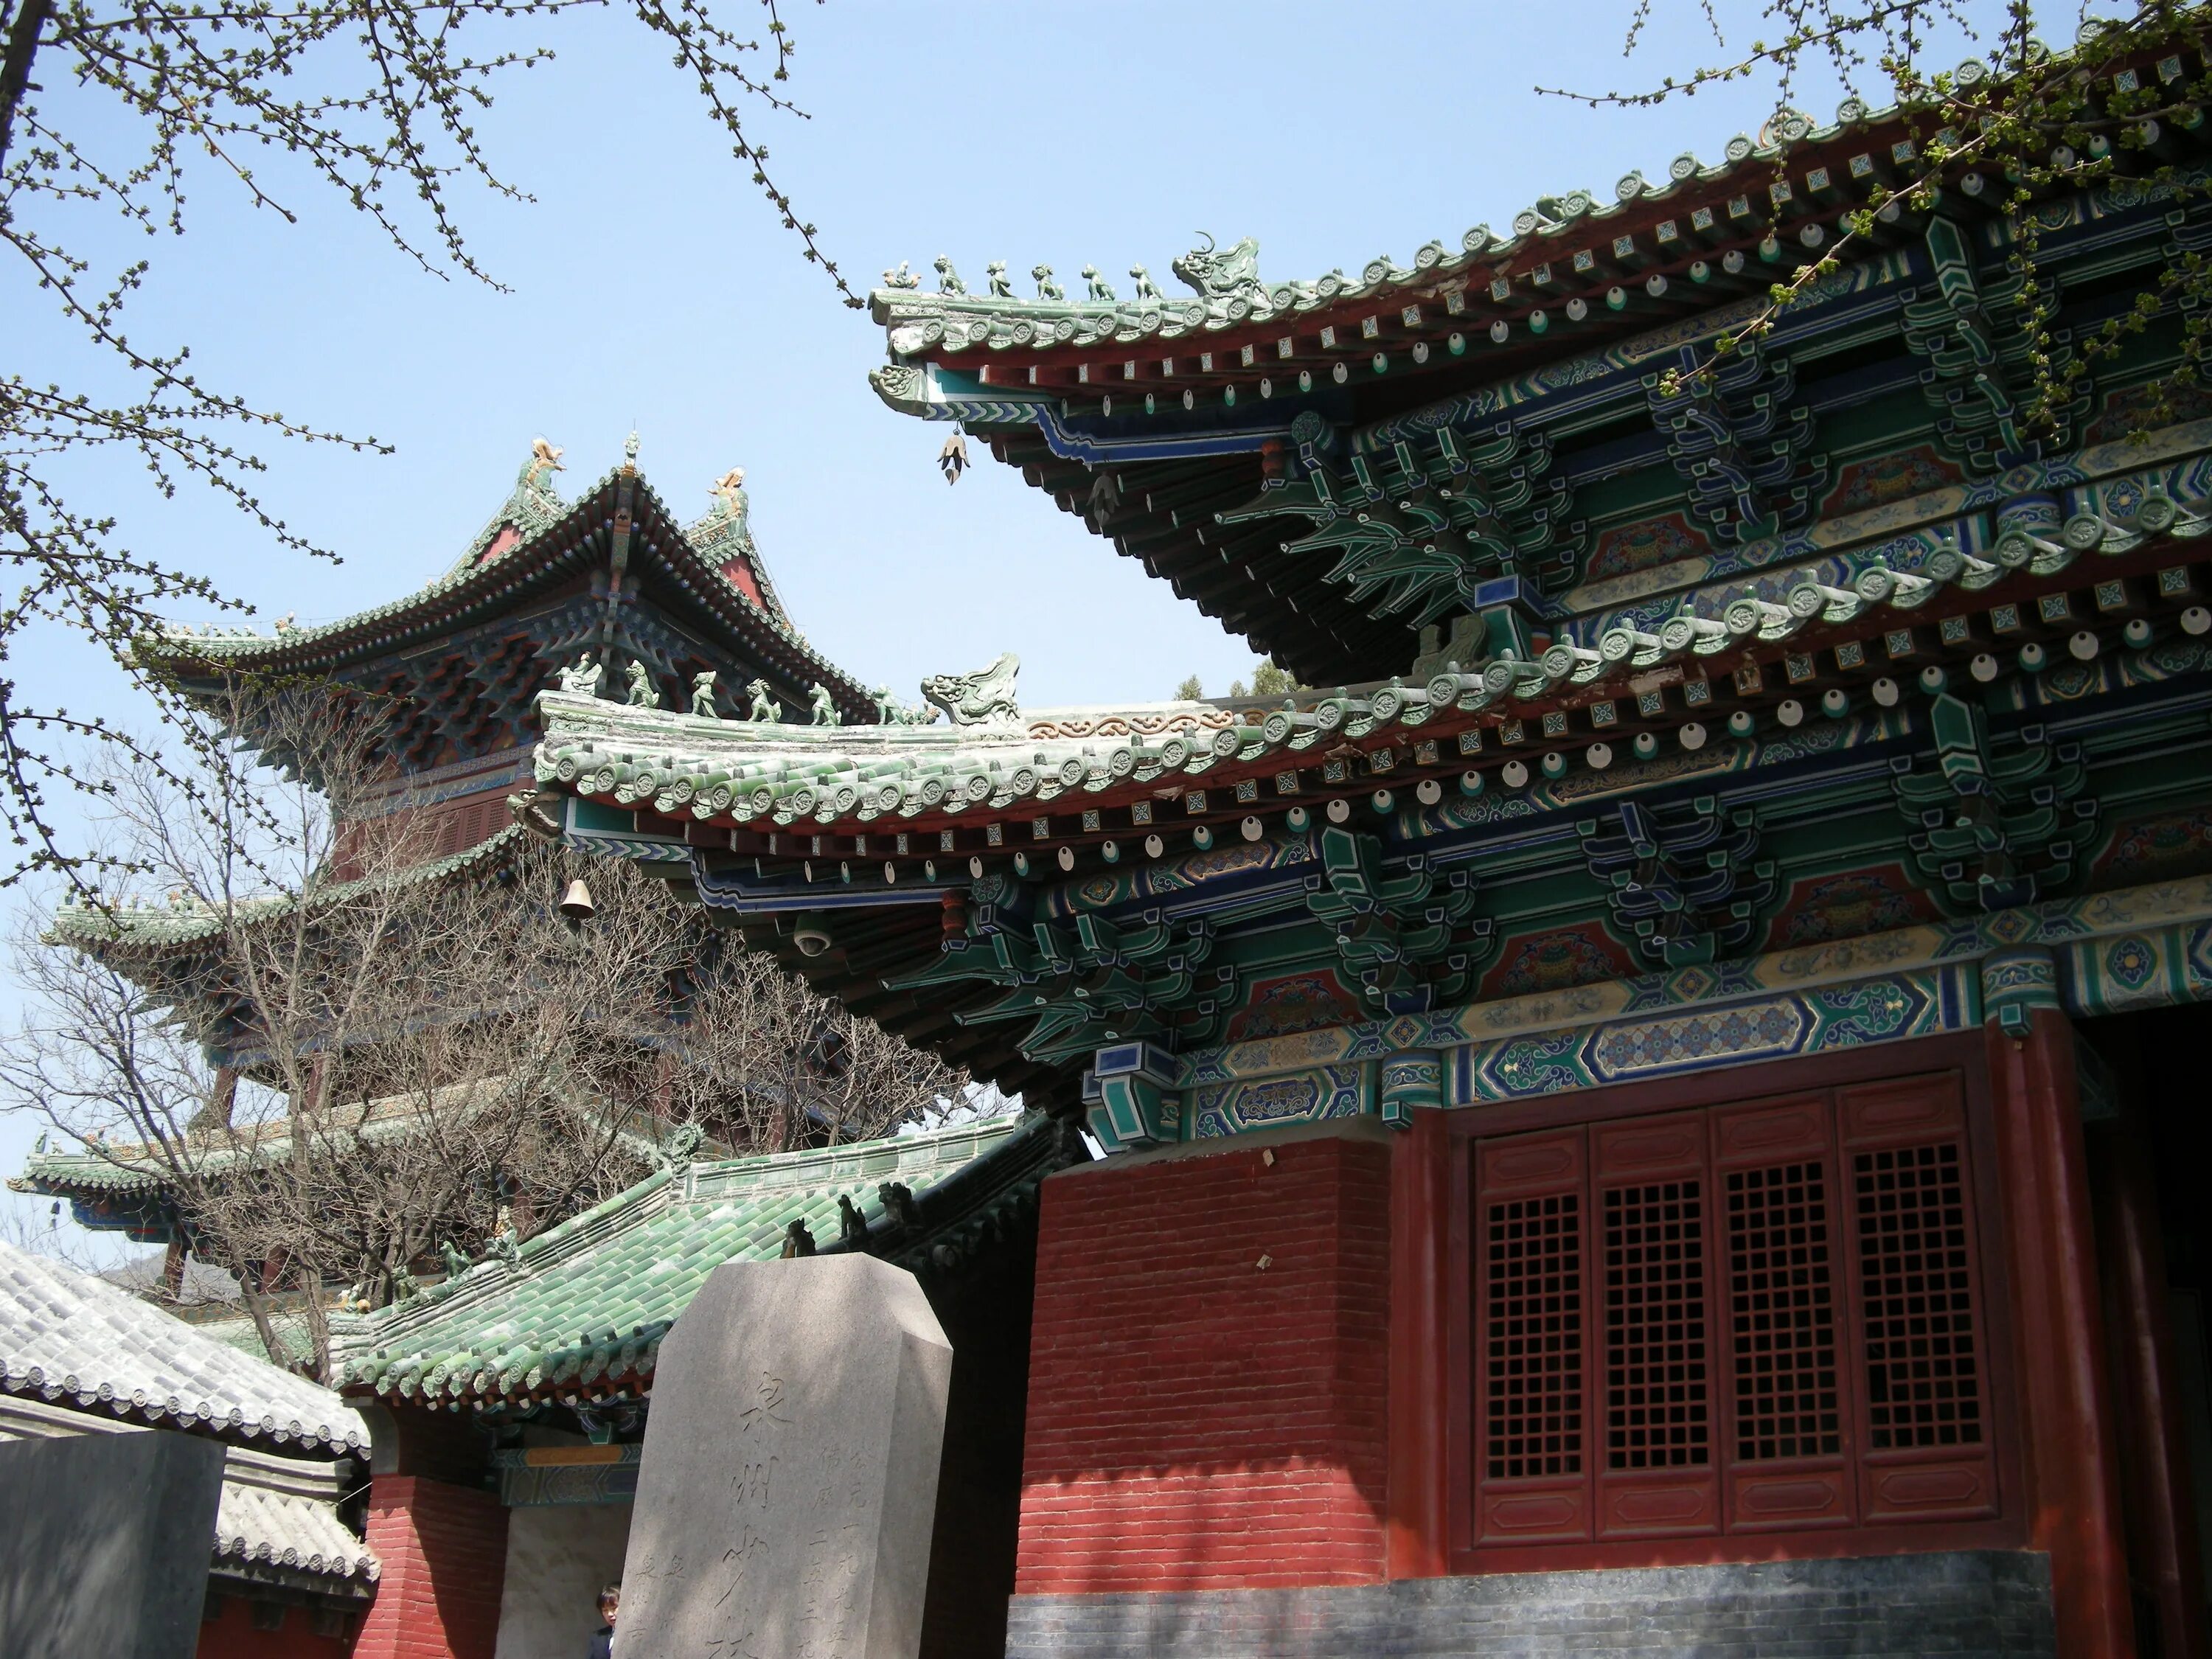 Shaolin temple. Храм Шаолинь Хэнань. Китайский монастырь Шаолинь. Монастырь Шаолинь Чжэнчжоу. Буддийский храм Шаолинь.